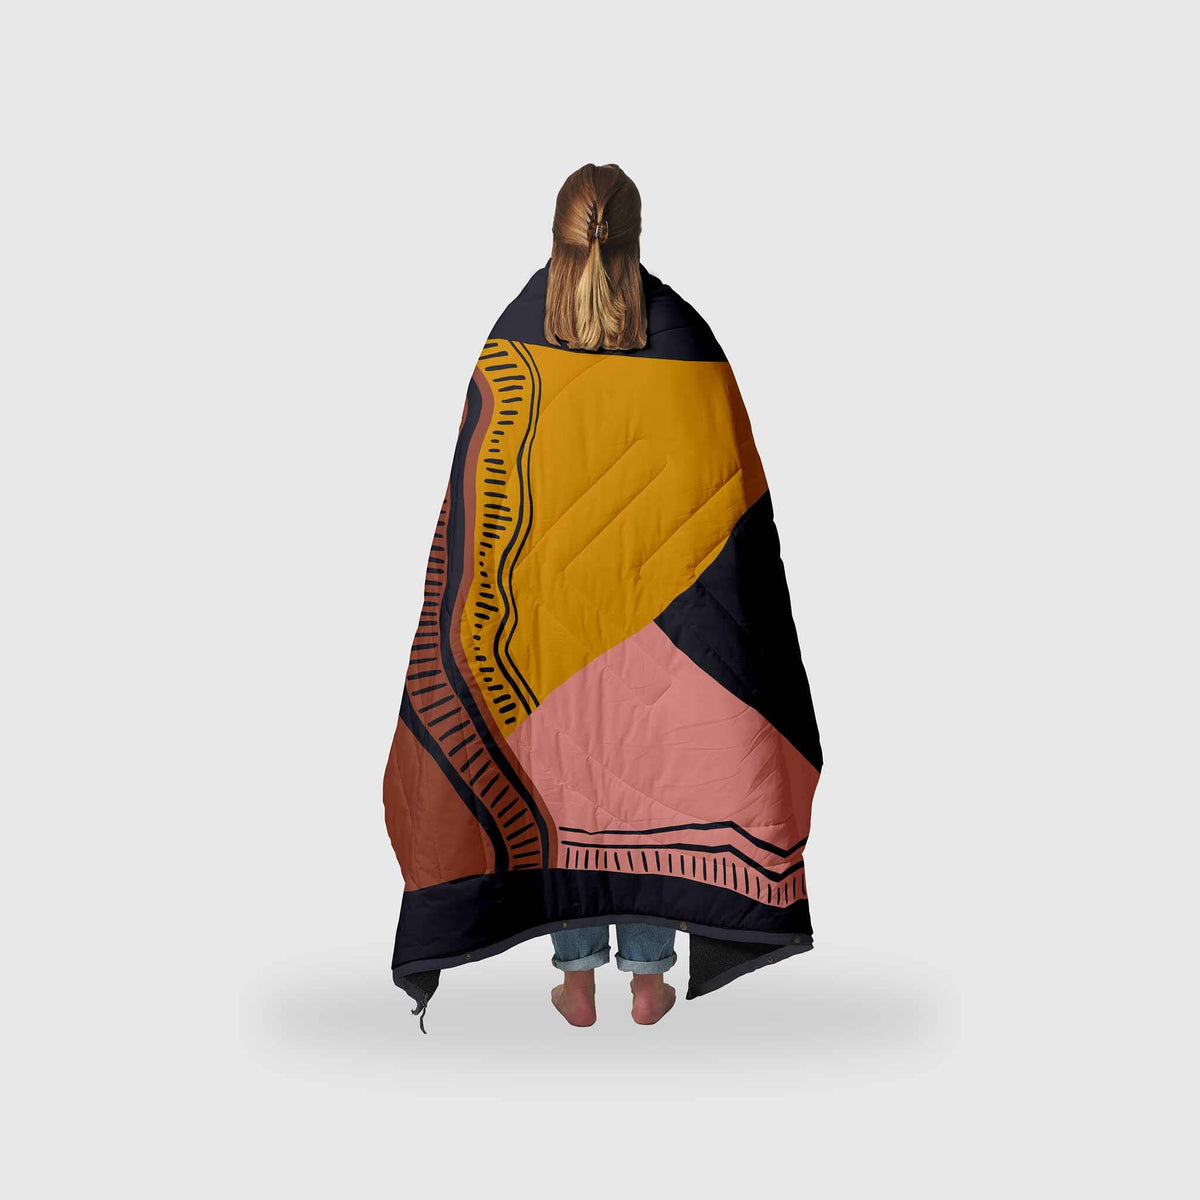 VOITED Fleece Outdoor Camping Blanket - Earth